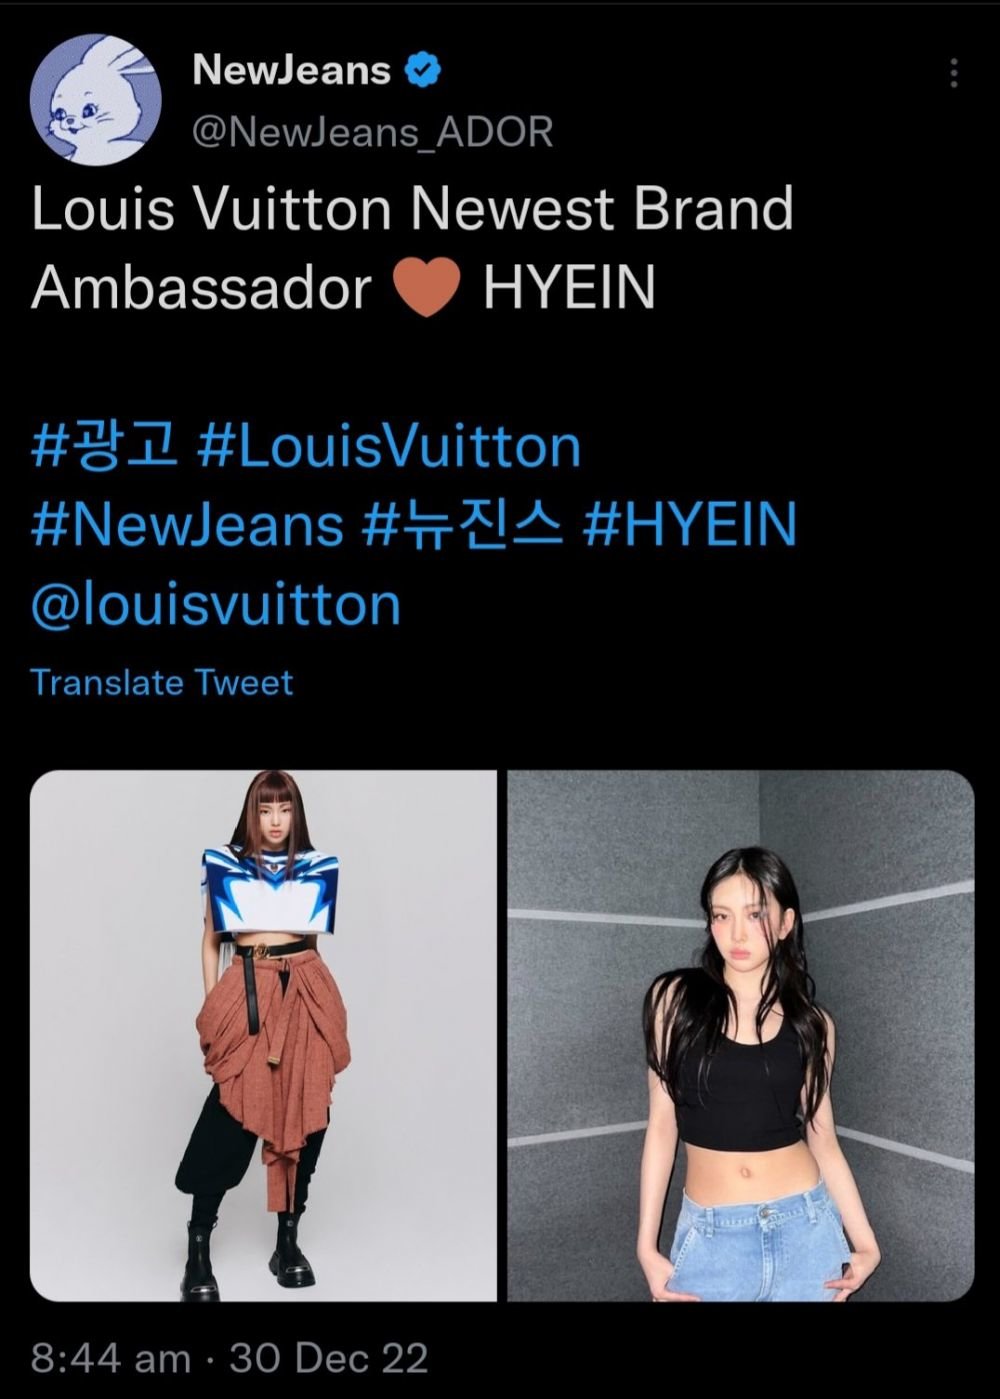 NewJeans' Hyein Chosen As Ambassador For Louis Vuitton